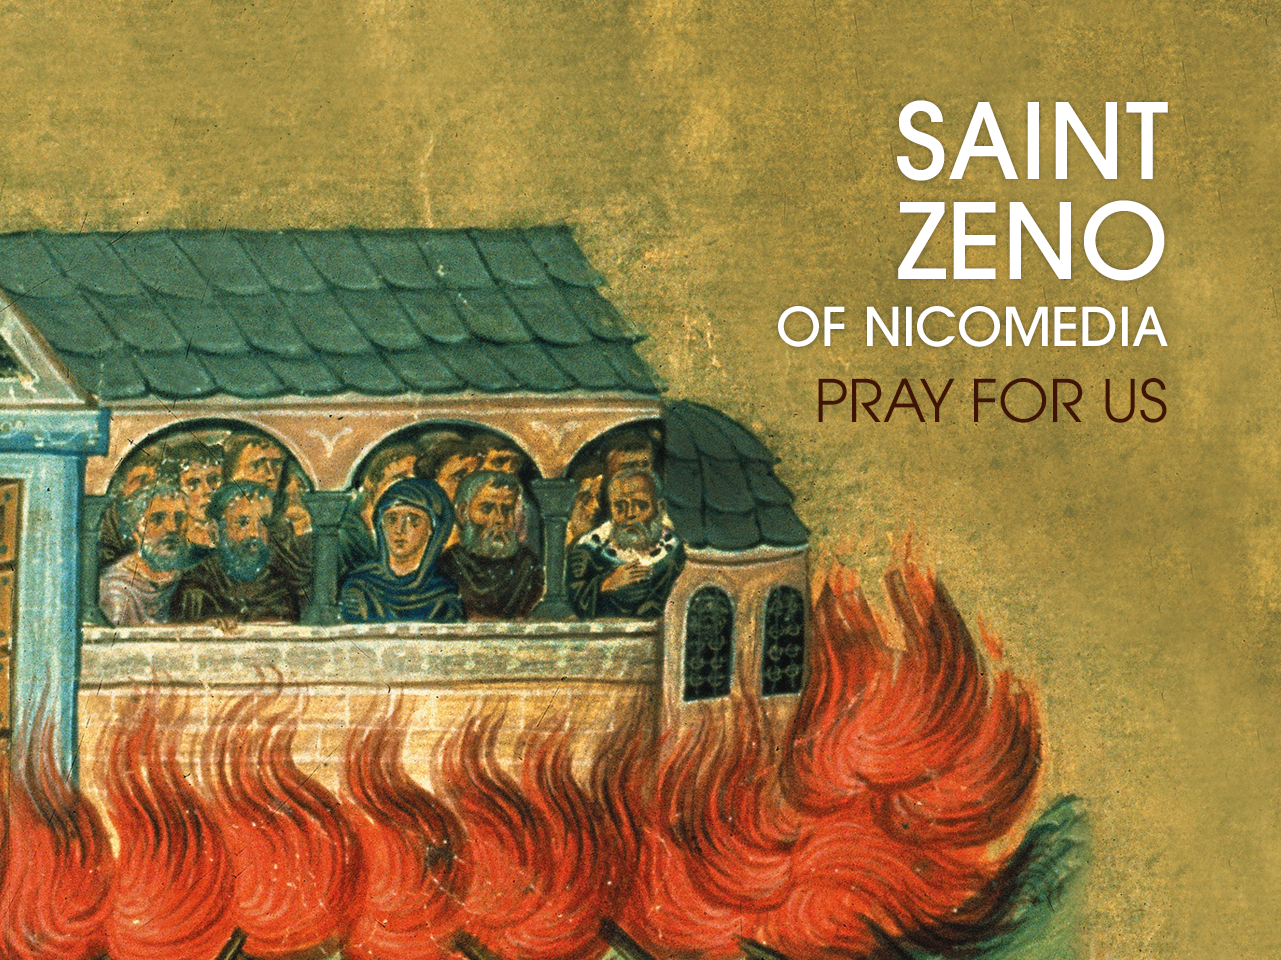 St. Zeno of Nicomedia